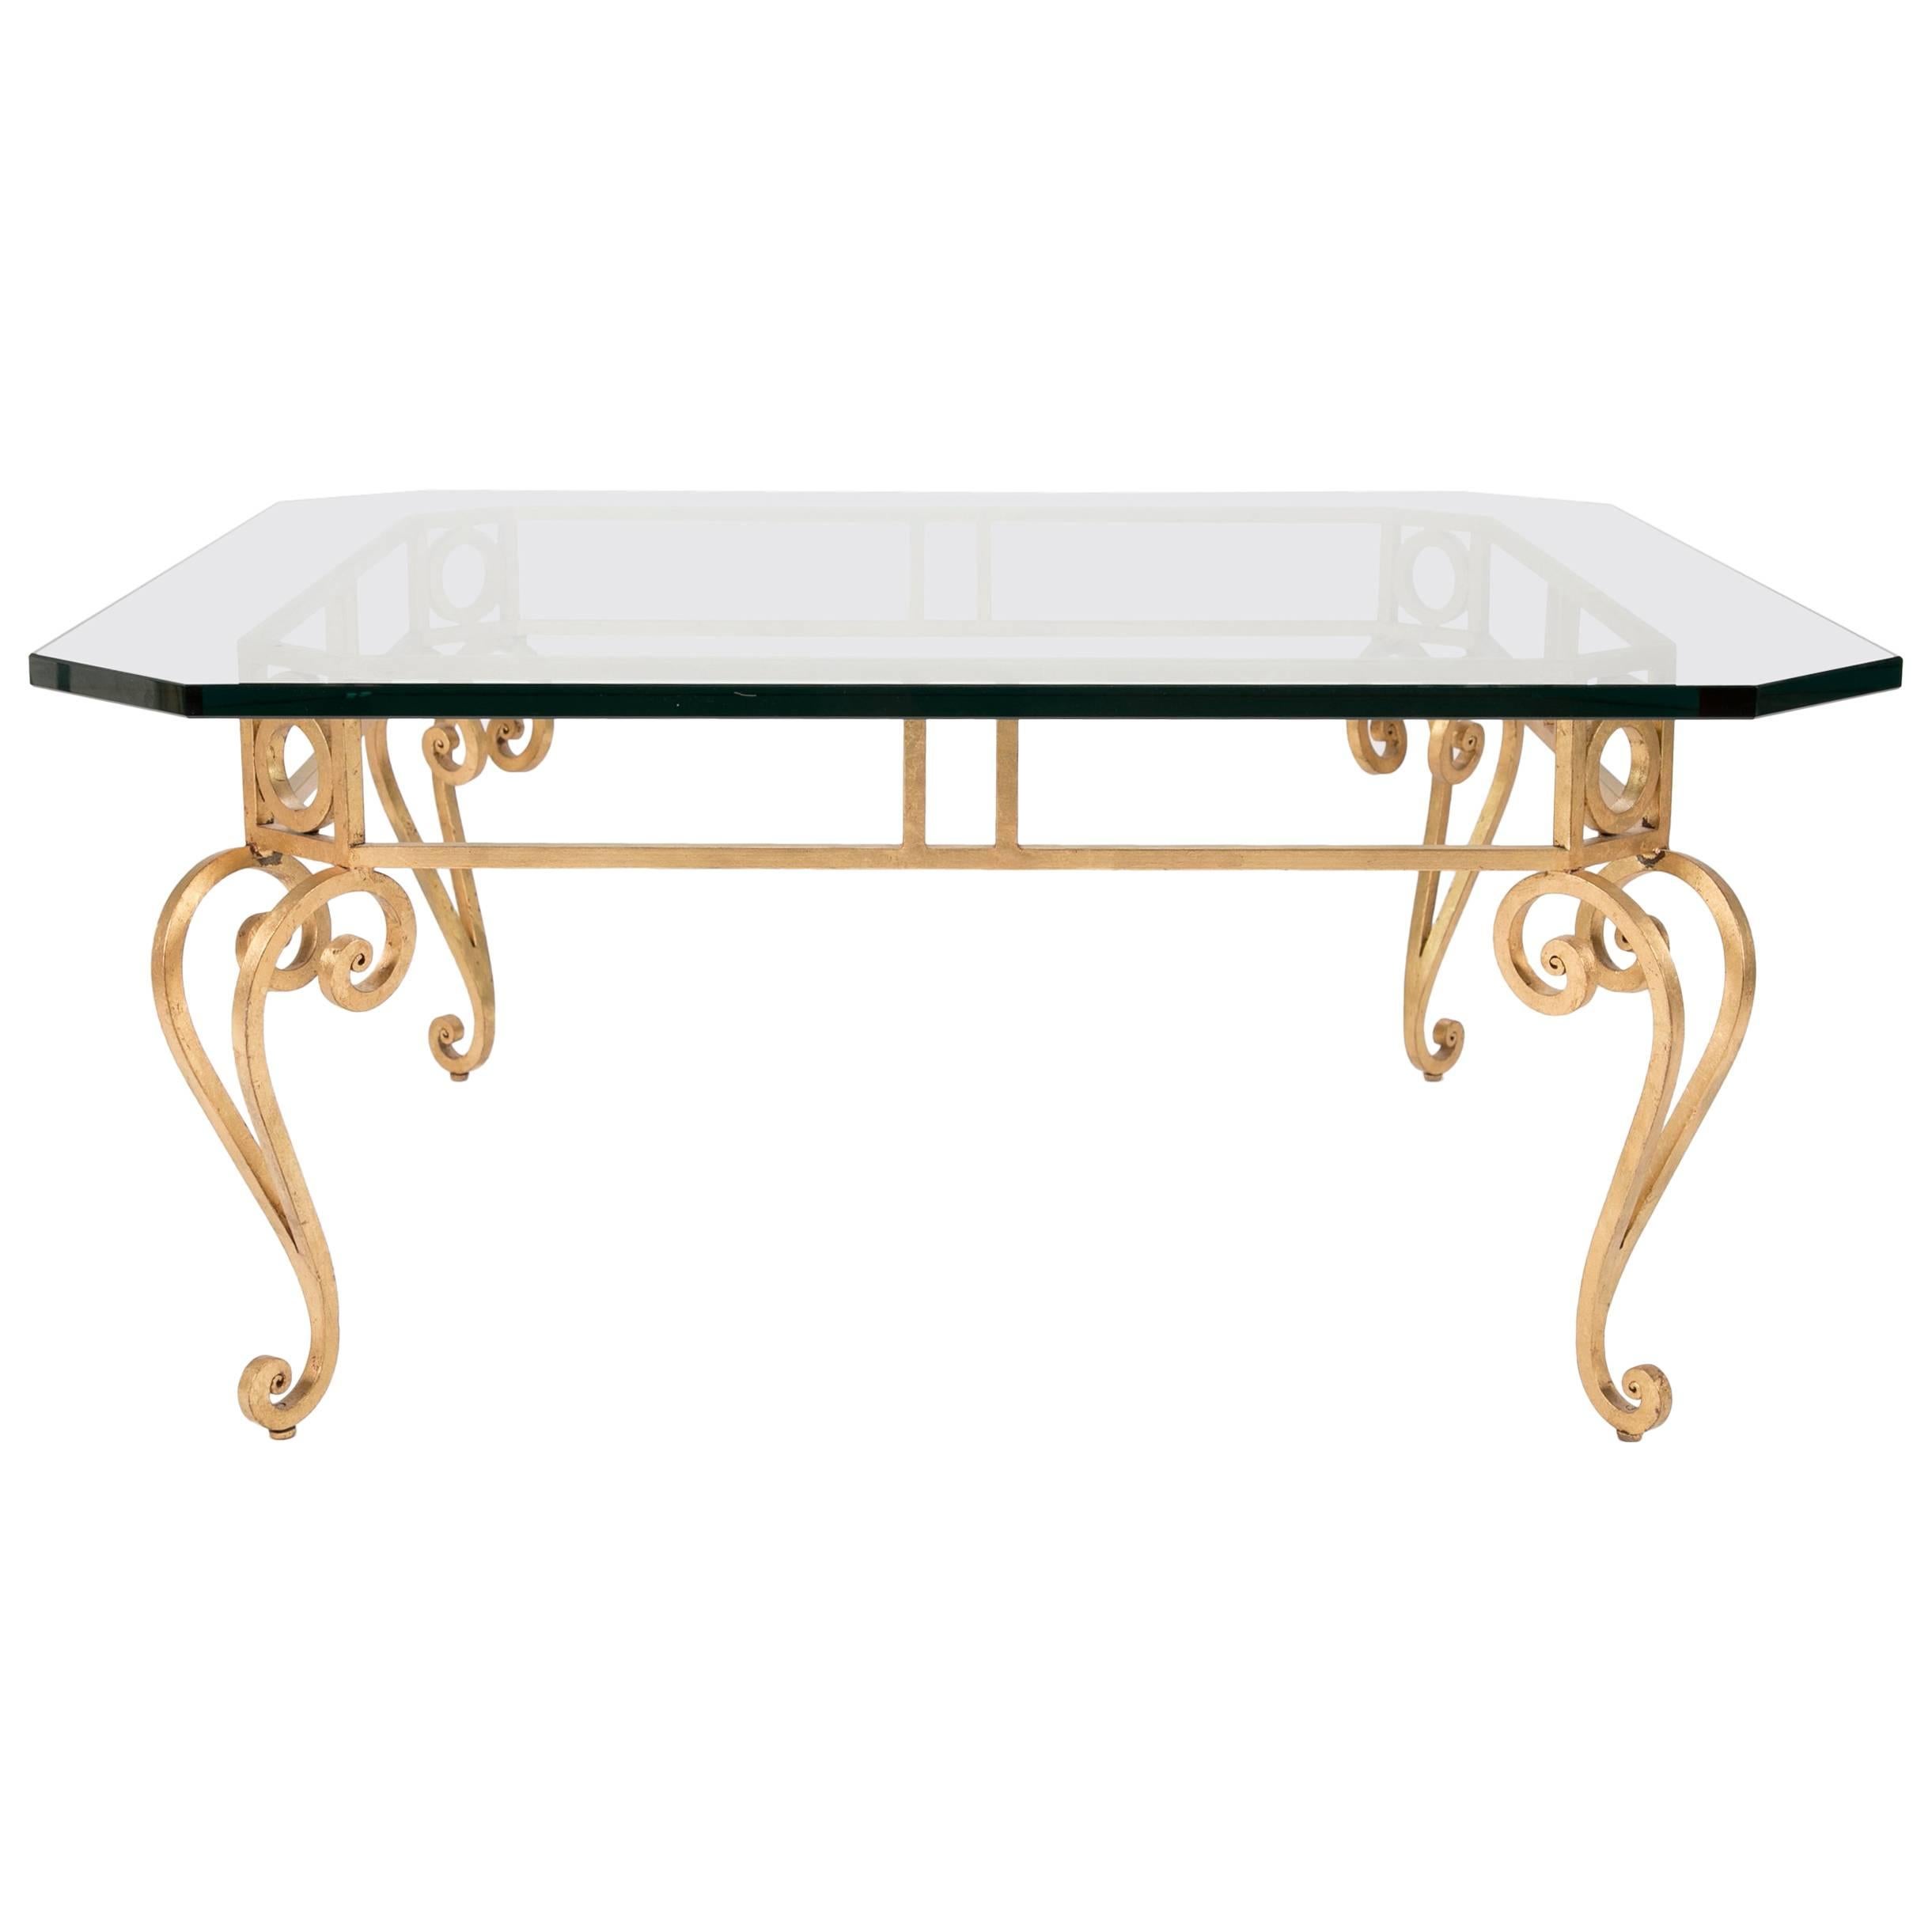 Table basse Hollywood Regency moderne du milieu du siècle dernier en fer doré avec plateau en verre